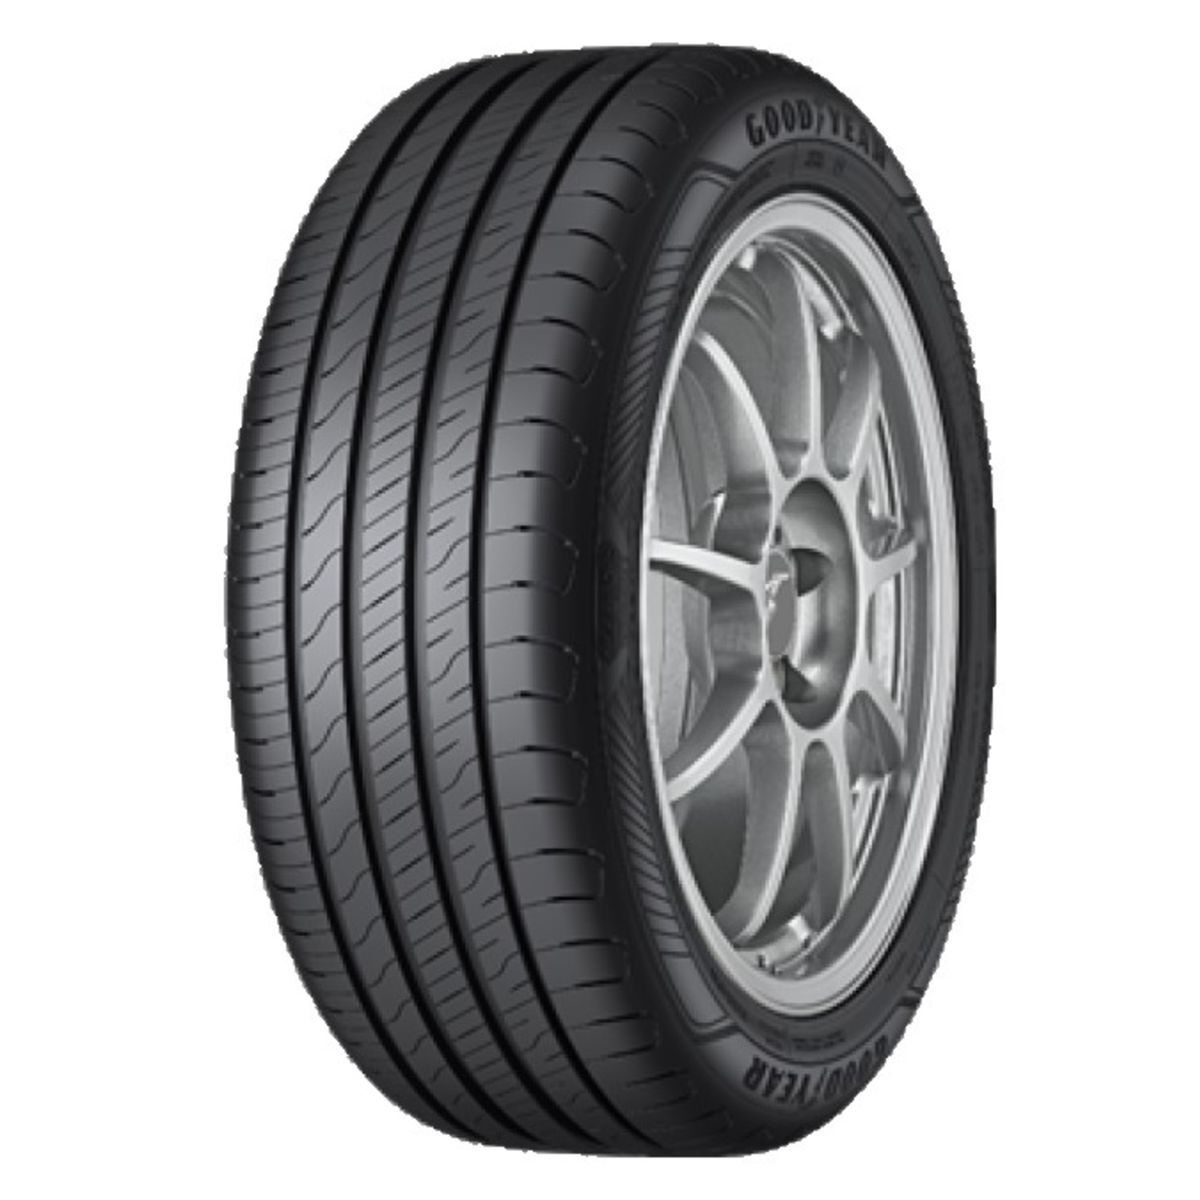 Neumáticos de verano GOODYEAR Efficientgrip Performance 2 205/55R16 91W